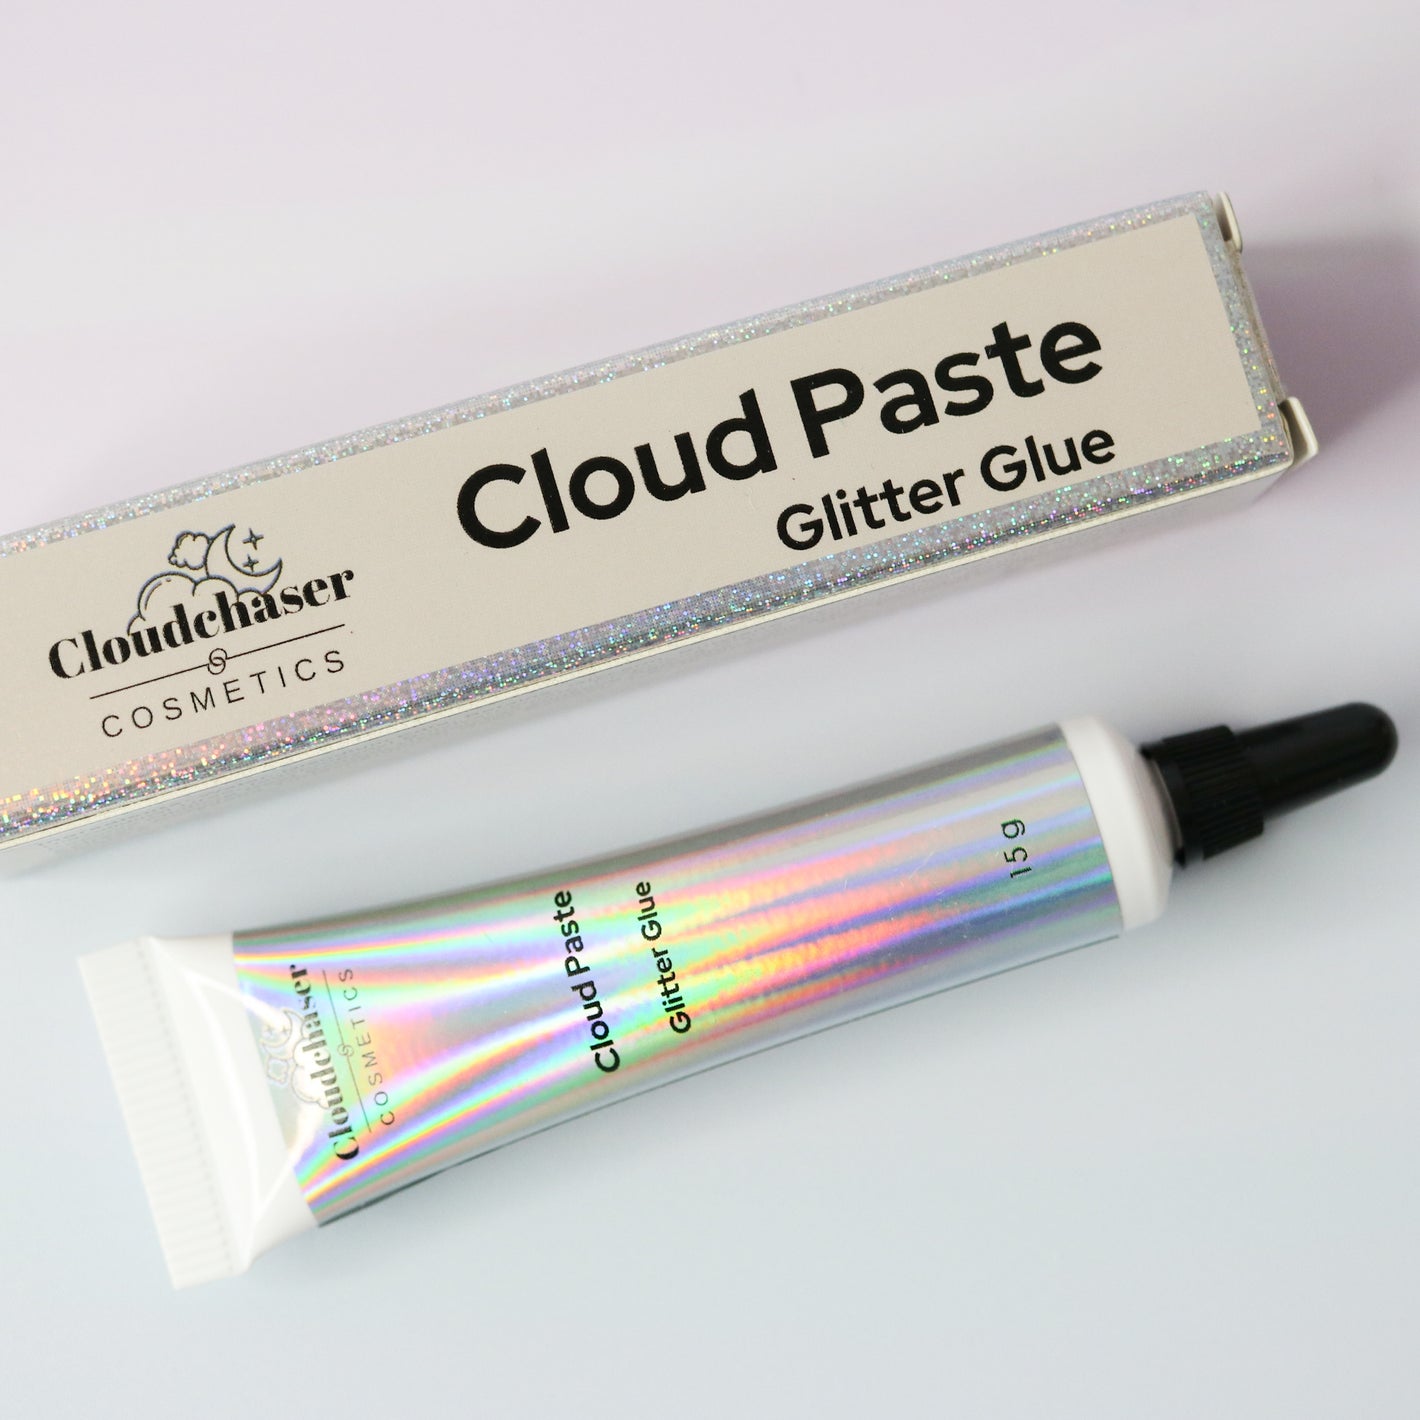 Cloud Paste, adhesive, eye makeup adhesive, glitter glue, glitter, eye makeup, makeup australia, festival makeup